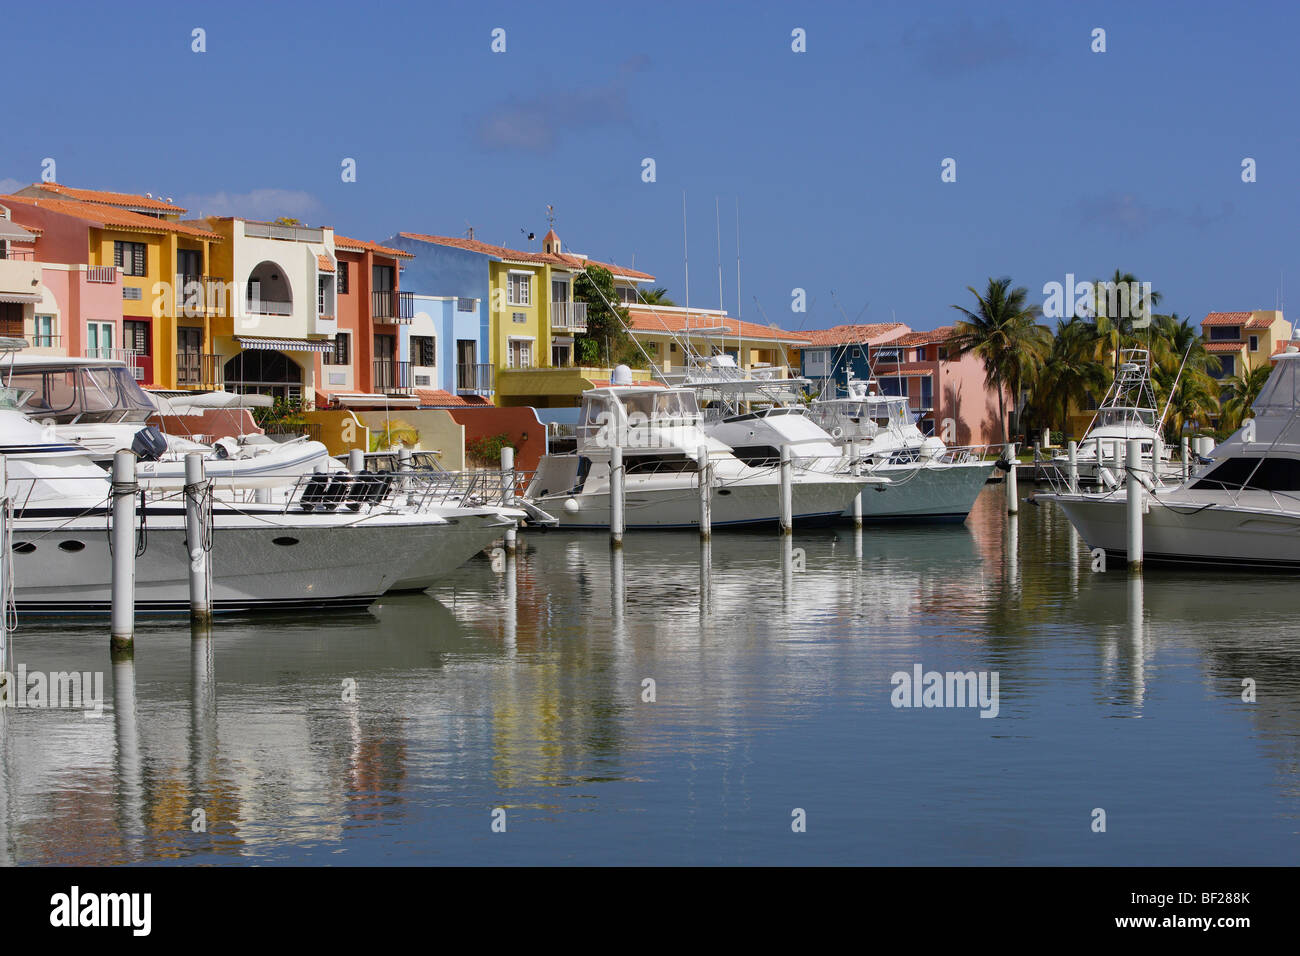 Boote sind in Amerika, Puerto Rico, Palmas del Mar Hafen vor der bunten Häusern, Palmas del Mar festgemacht Stockfoto